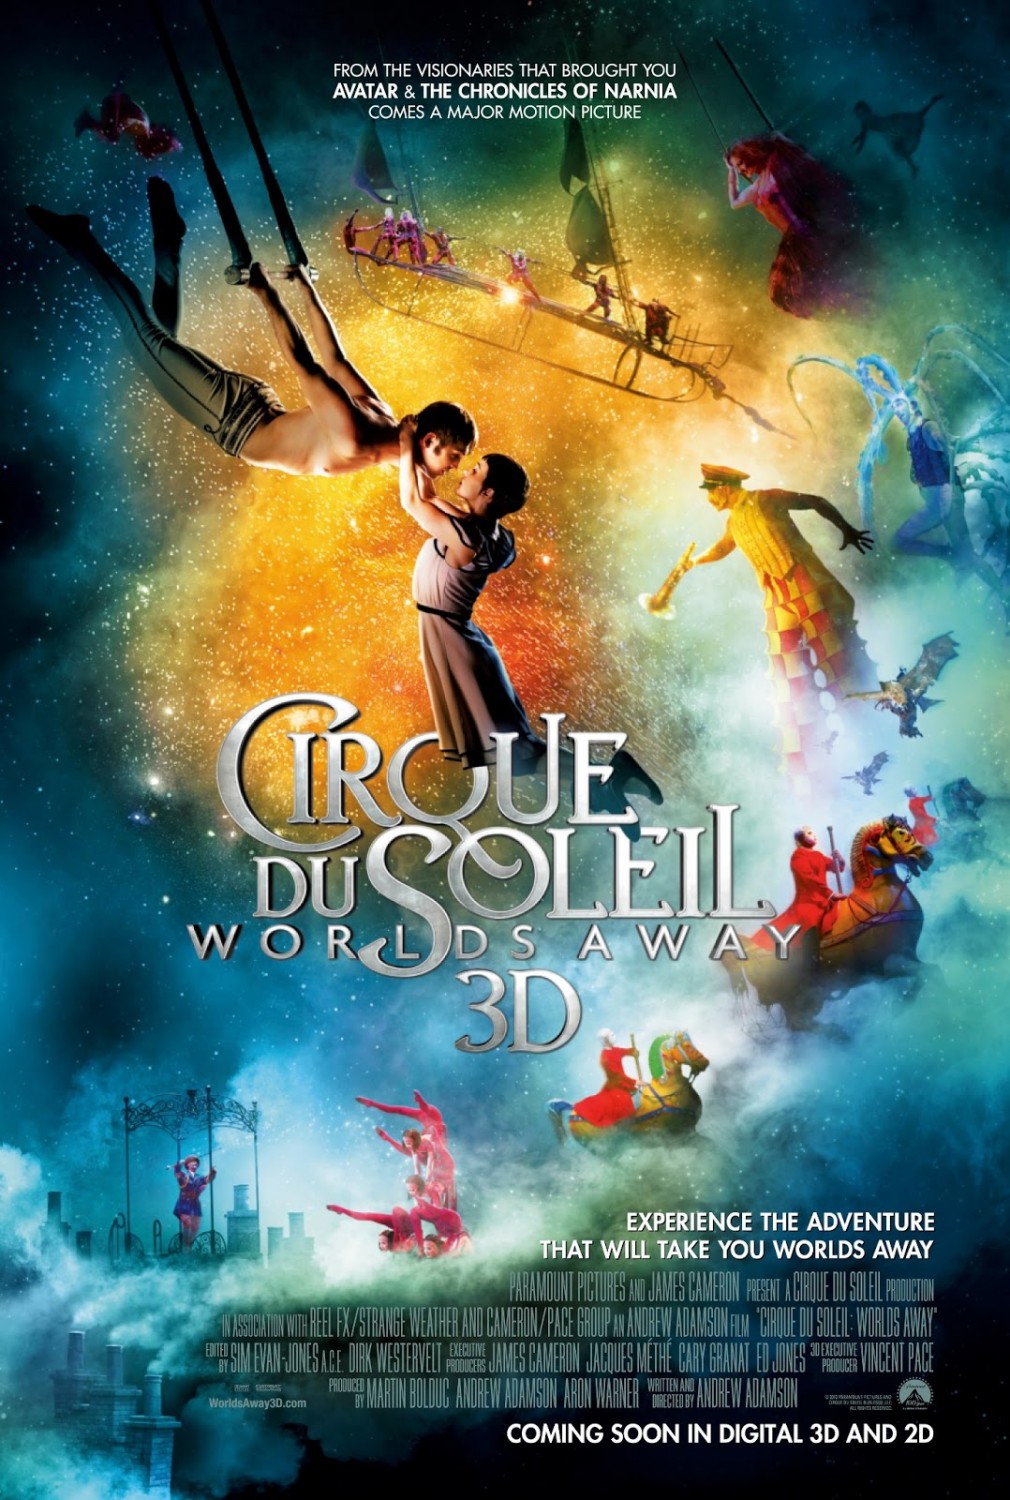 Cirque Du Soleil World's Away